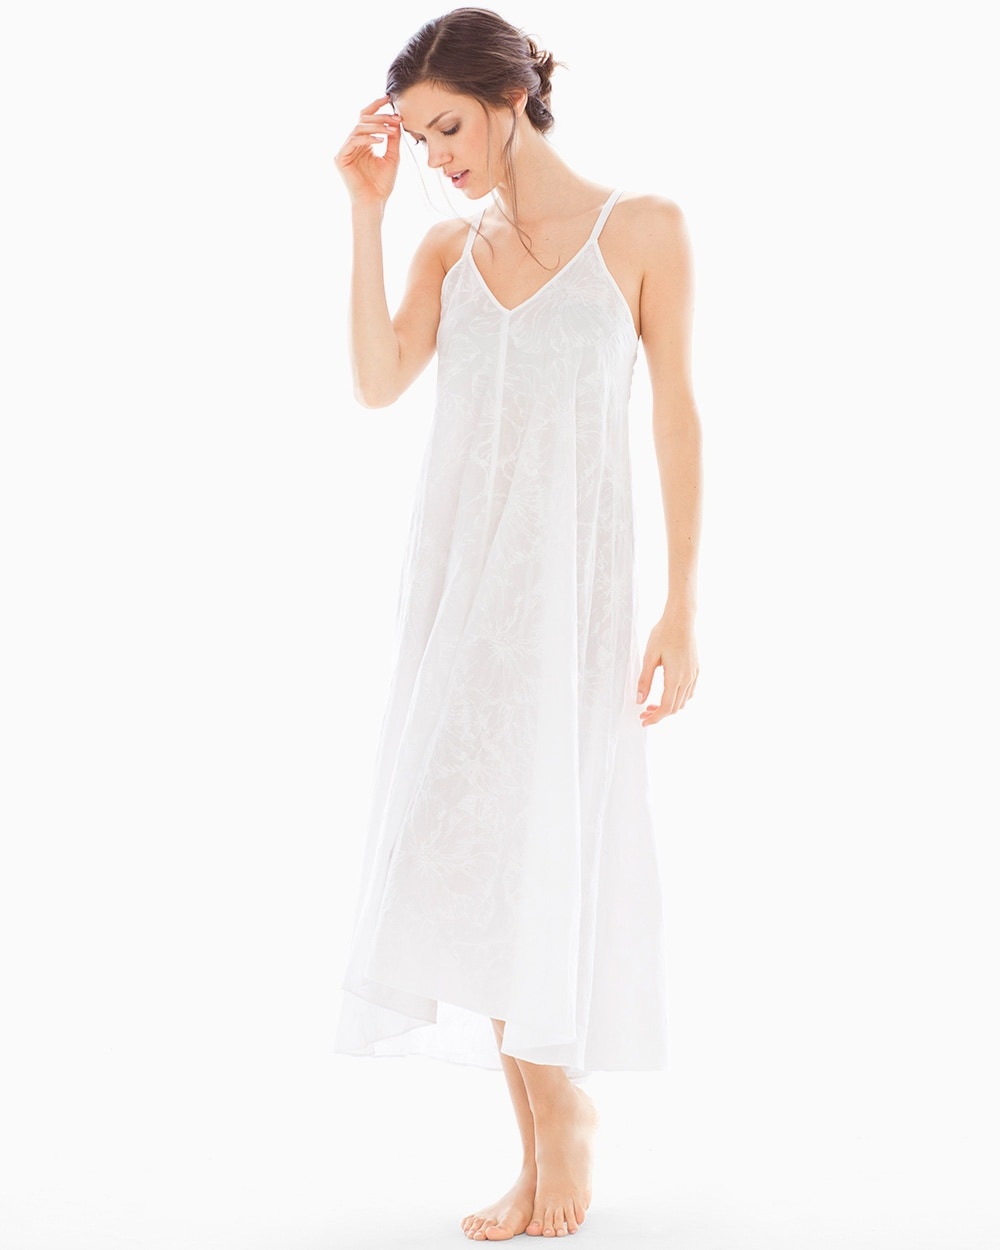 Oscar de la Renta Embroidered Cotton Nightgown White With White Embroidery